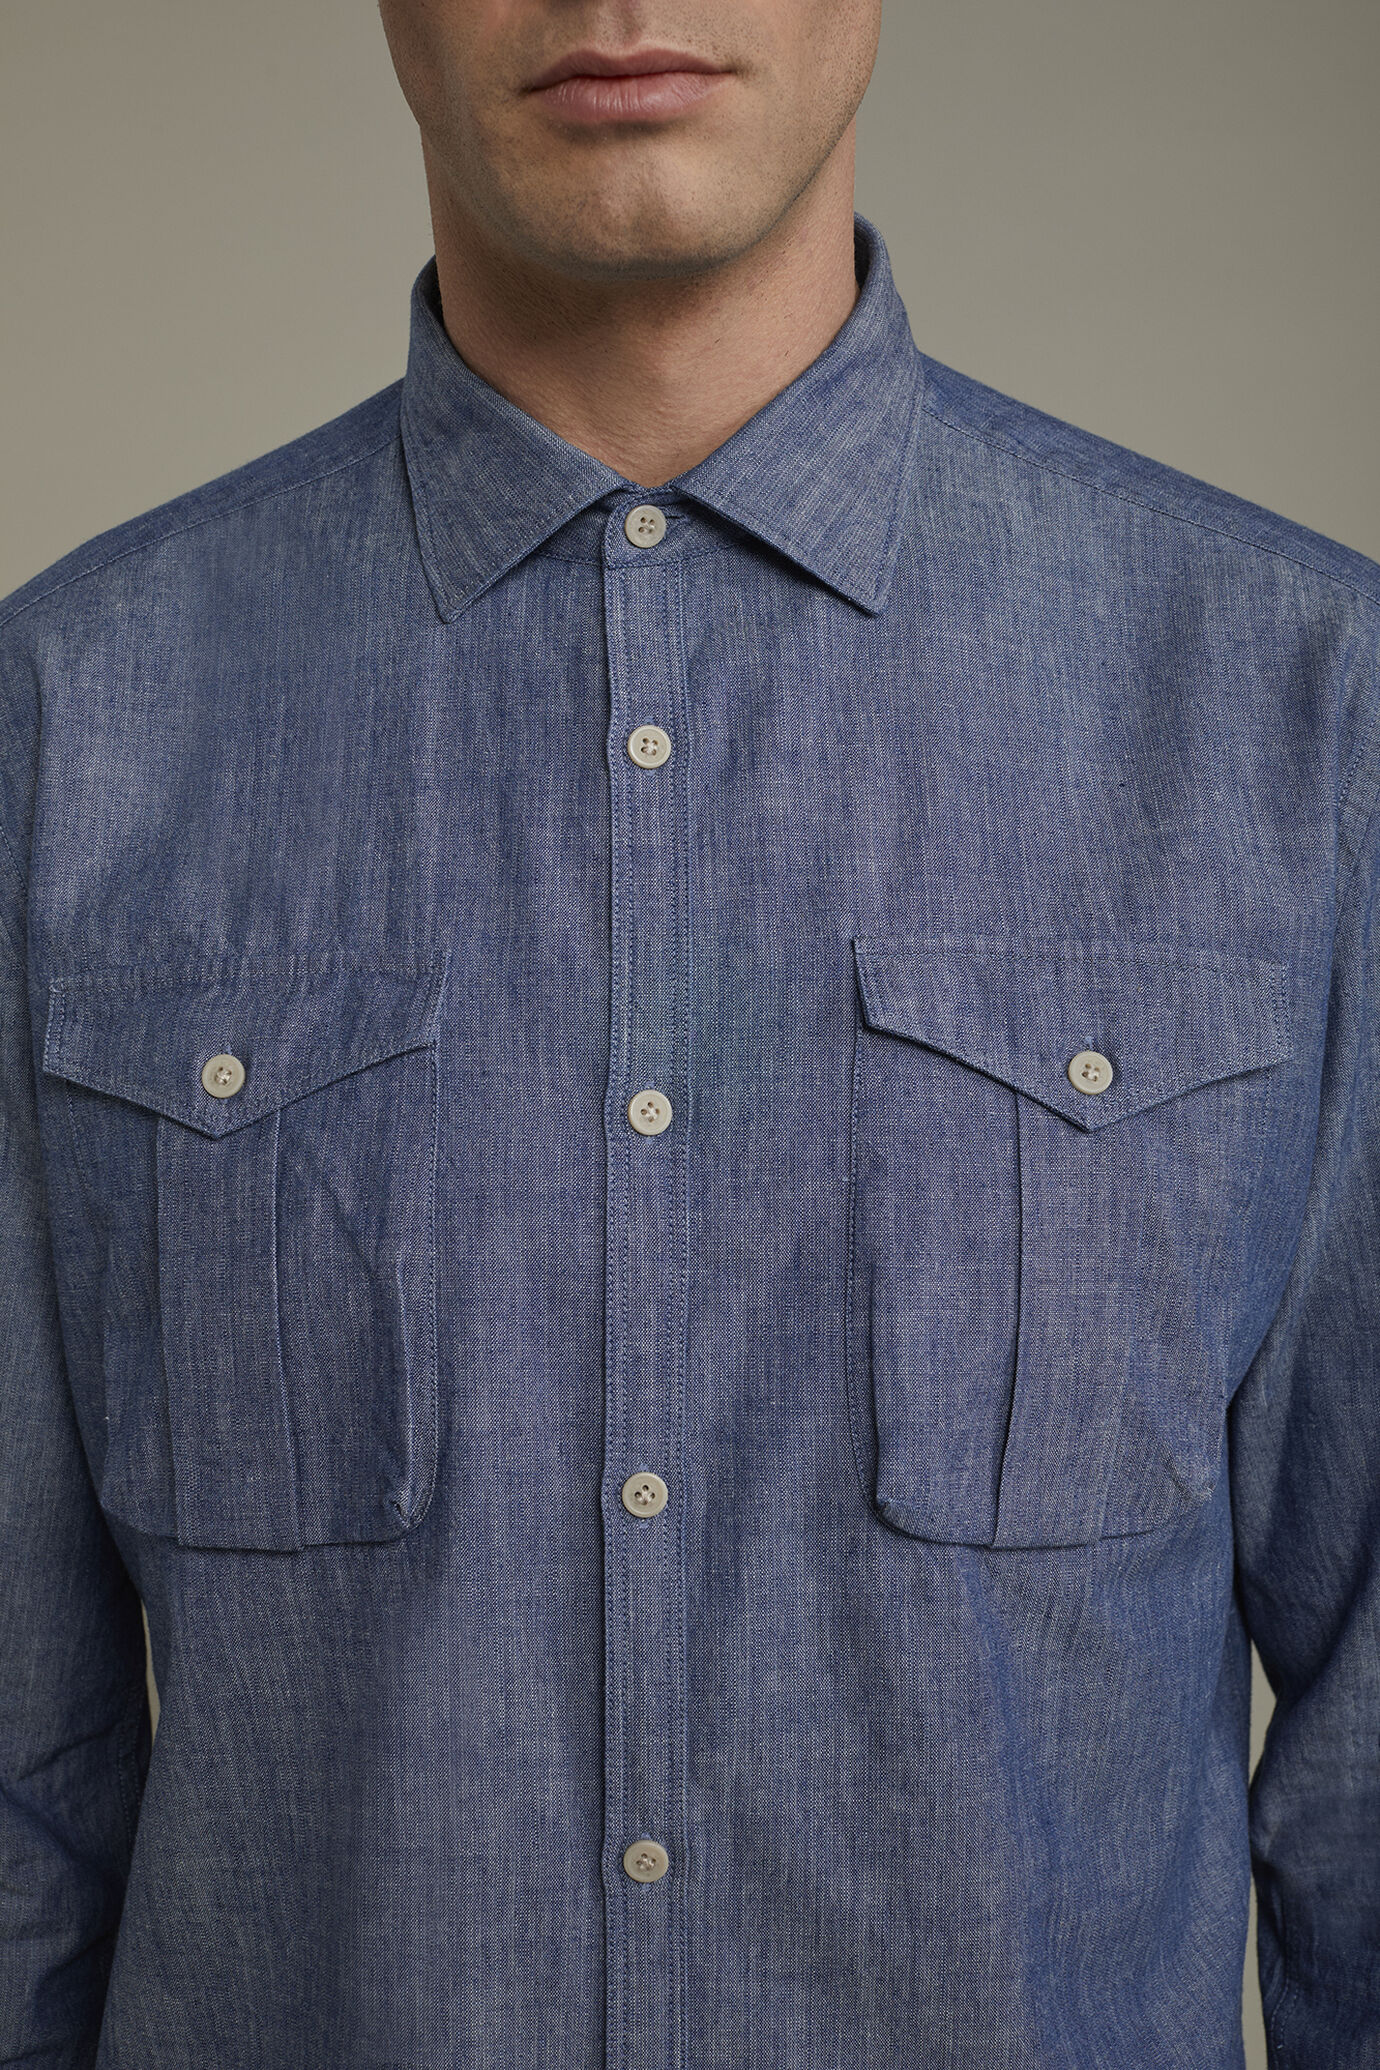 Men’s casual shirt classic collar 100% cotton denim fabric comfort fit image number 3